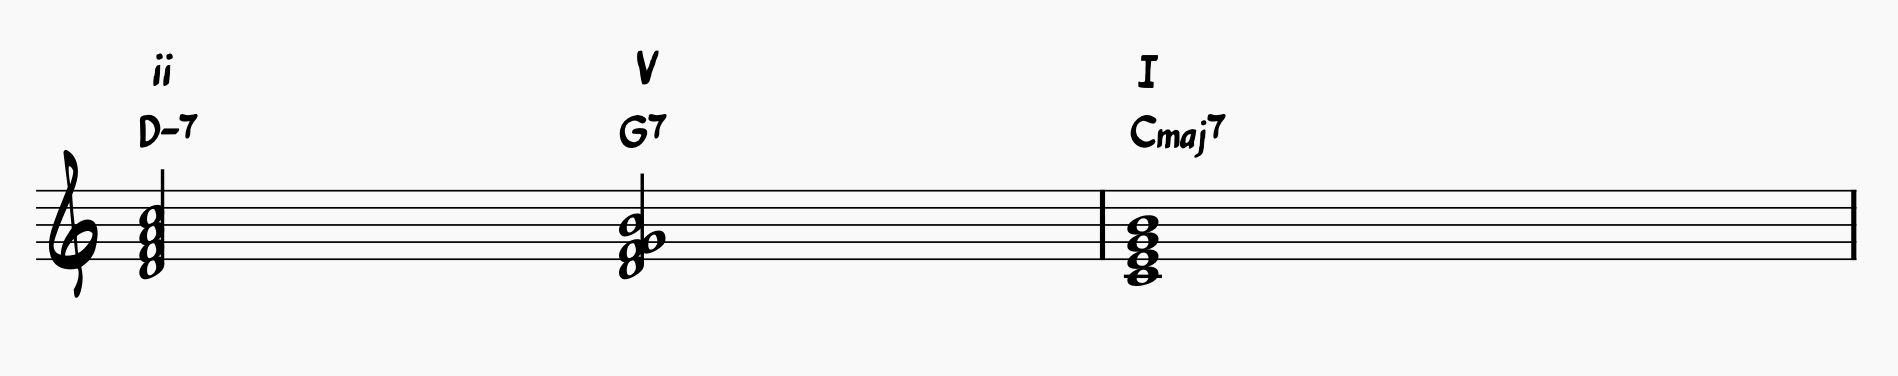 short chord progression: ii-V-I chord progression in C